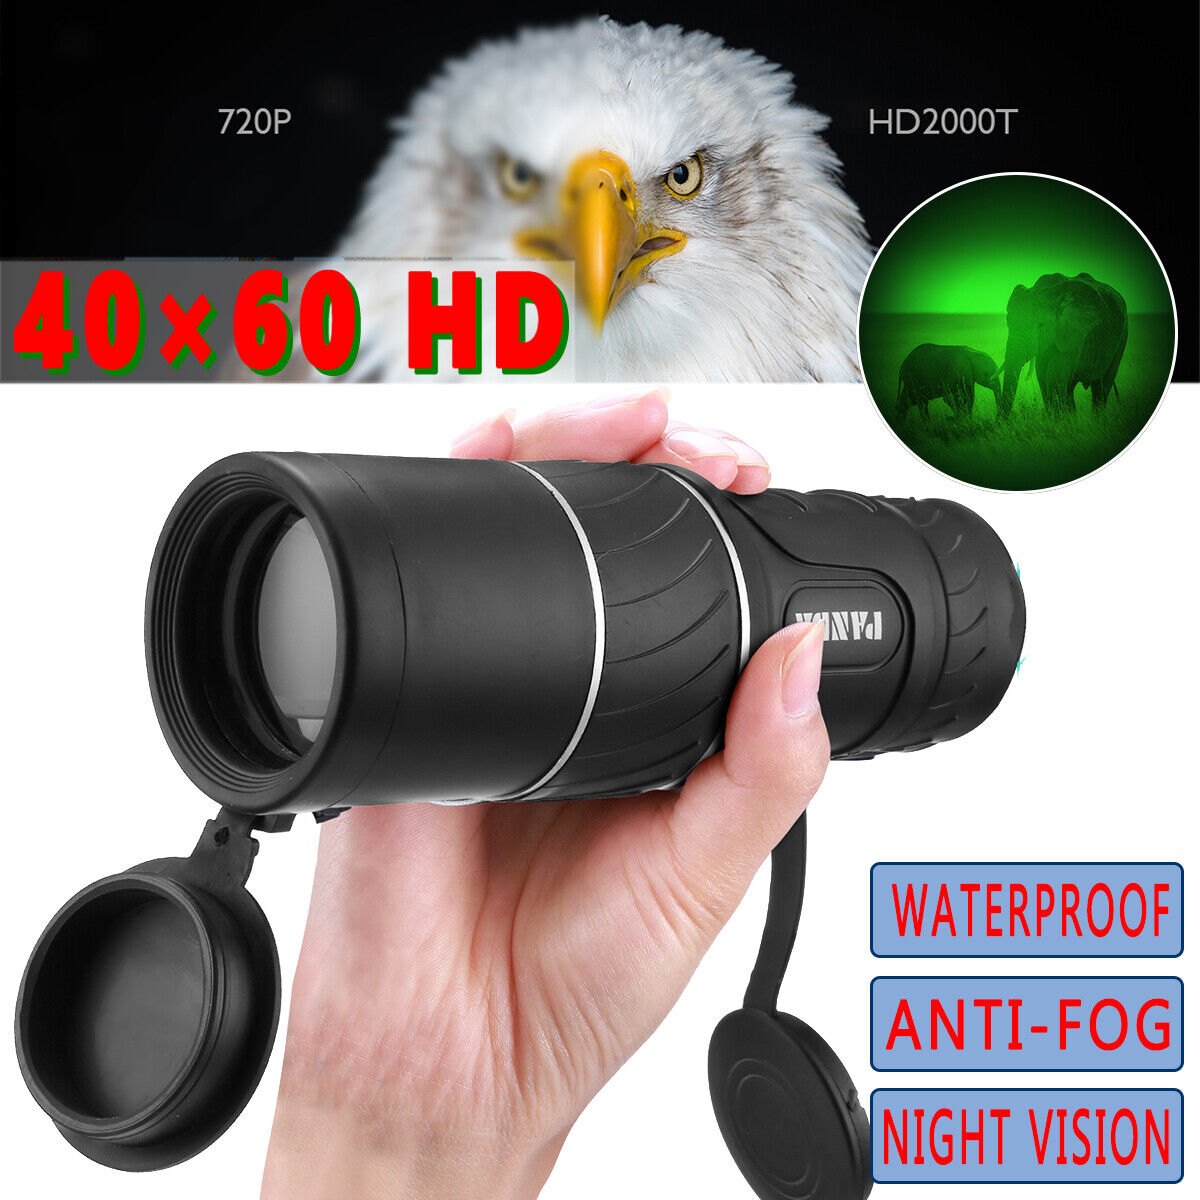 40X60 HD OPTICS BAK4 Night Vision Monocular High Power Telescope Portable + Case